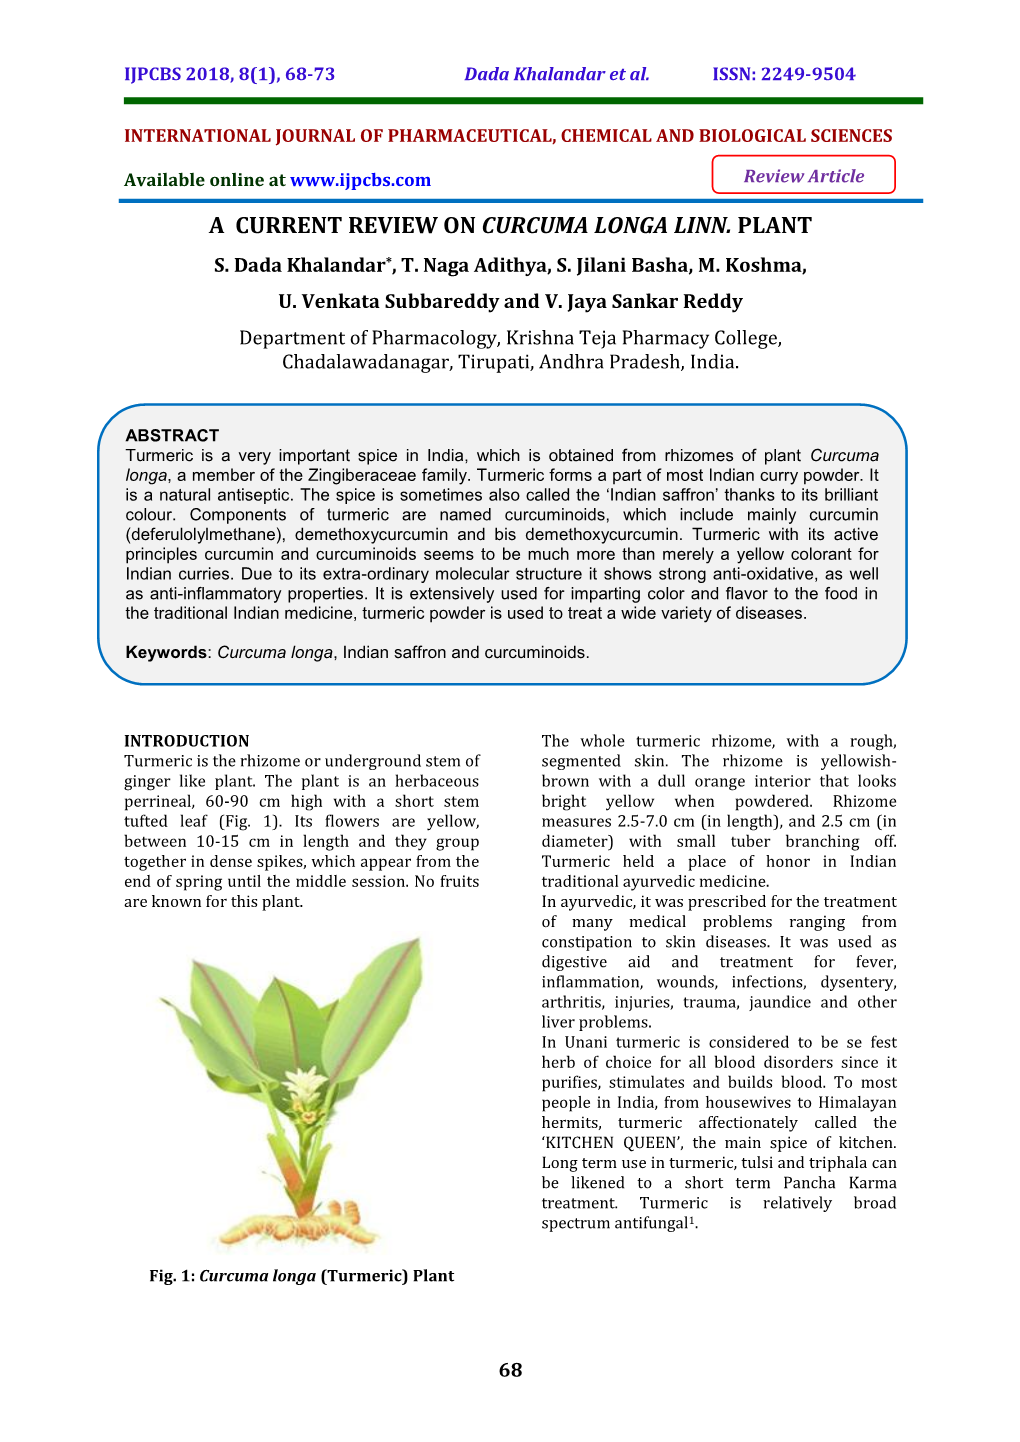 A Current Review on Curcuma Longa Linn. Plant S